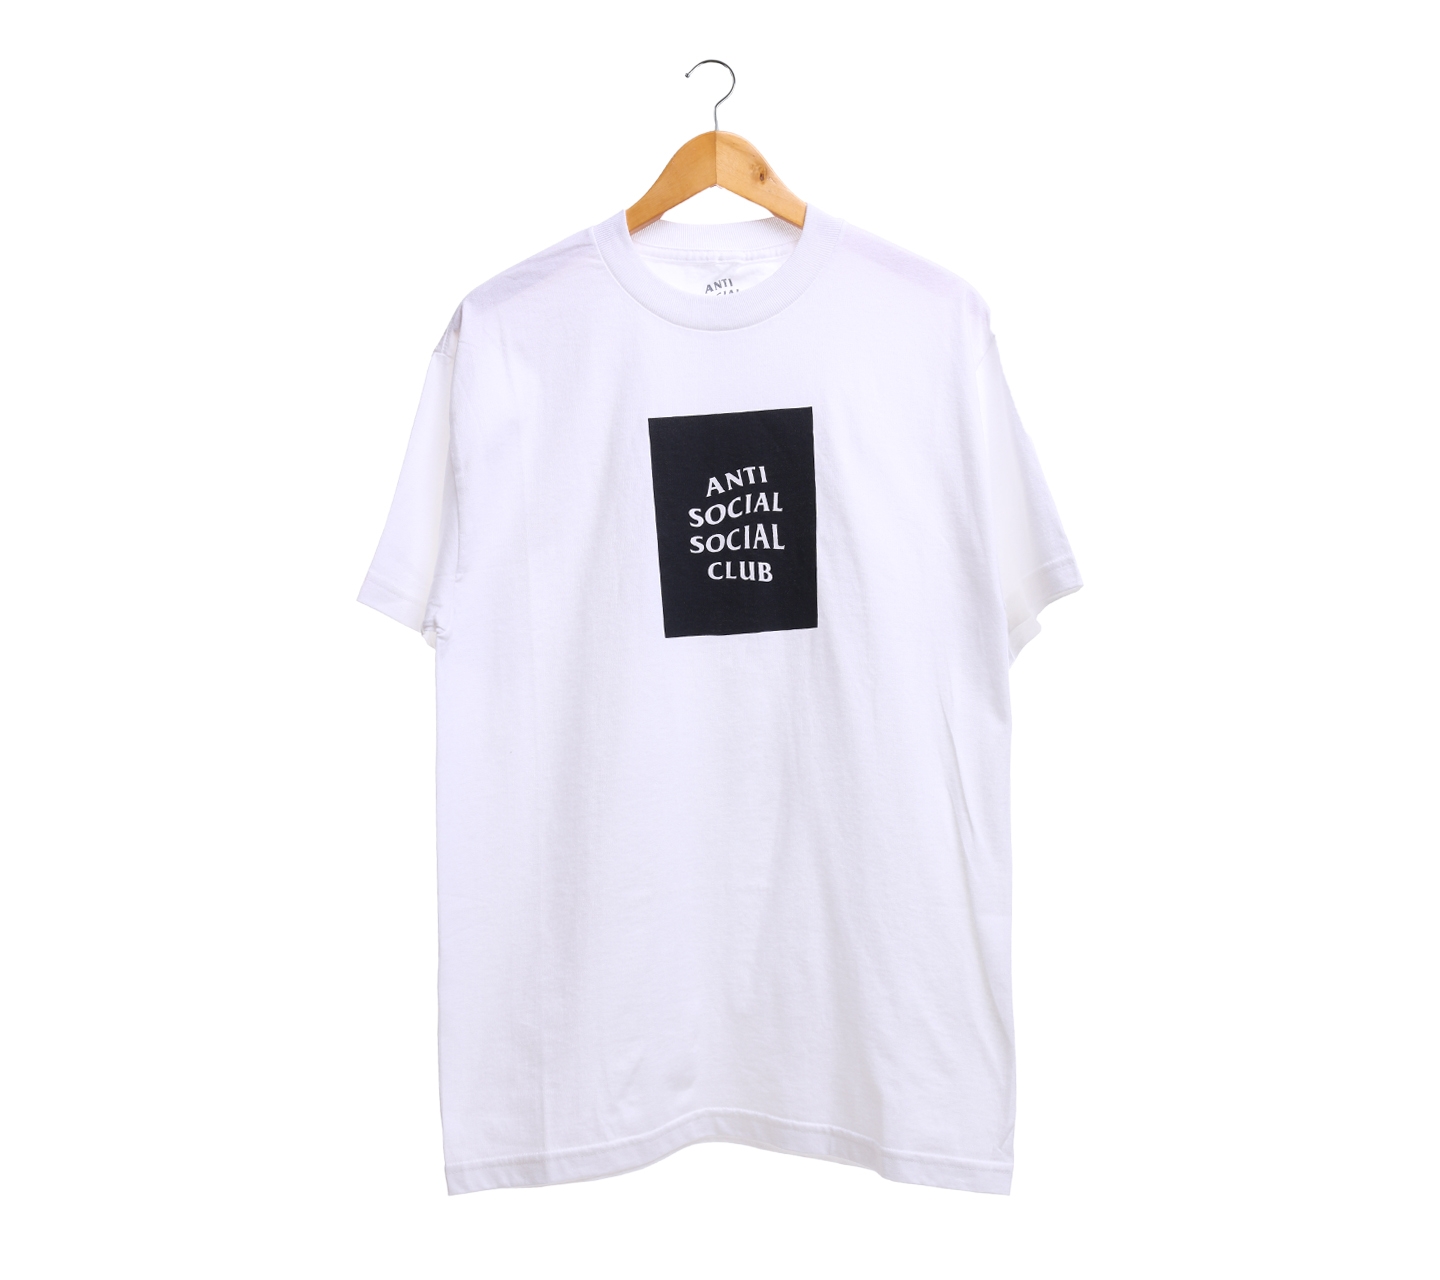 Anti social social club Tee White T-shirt